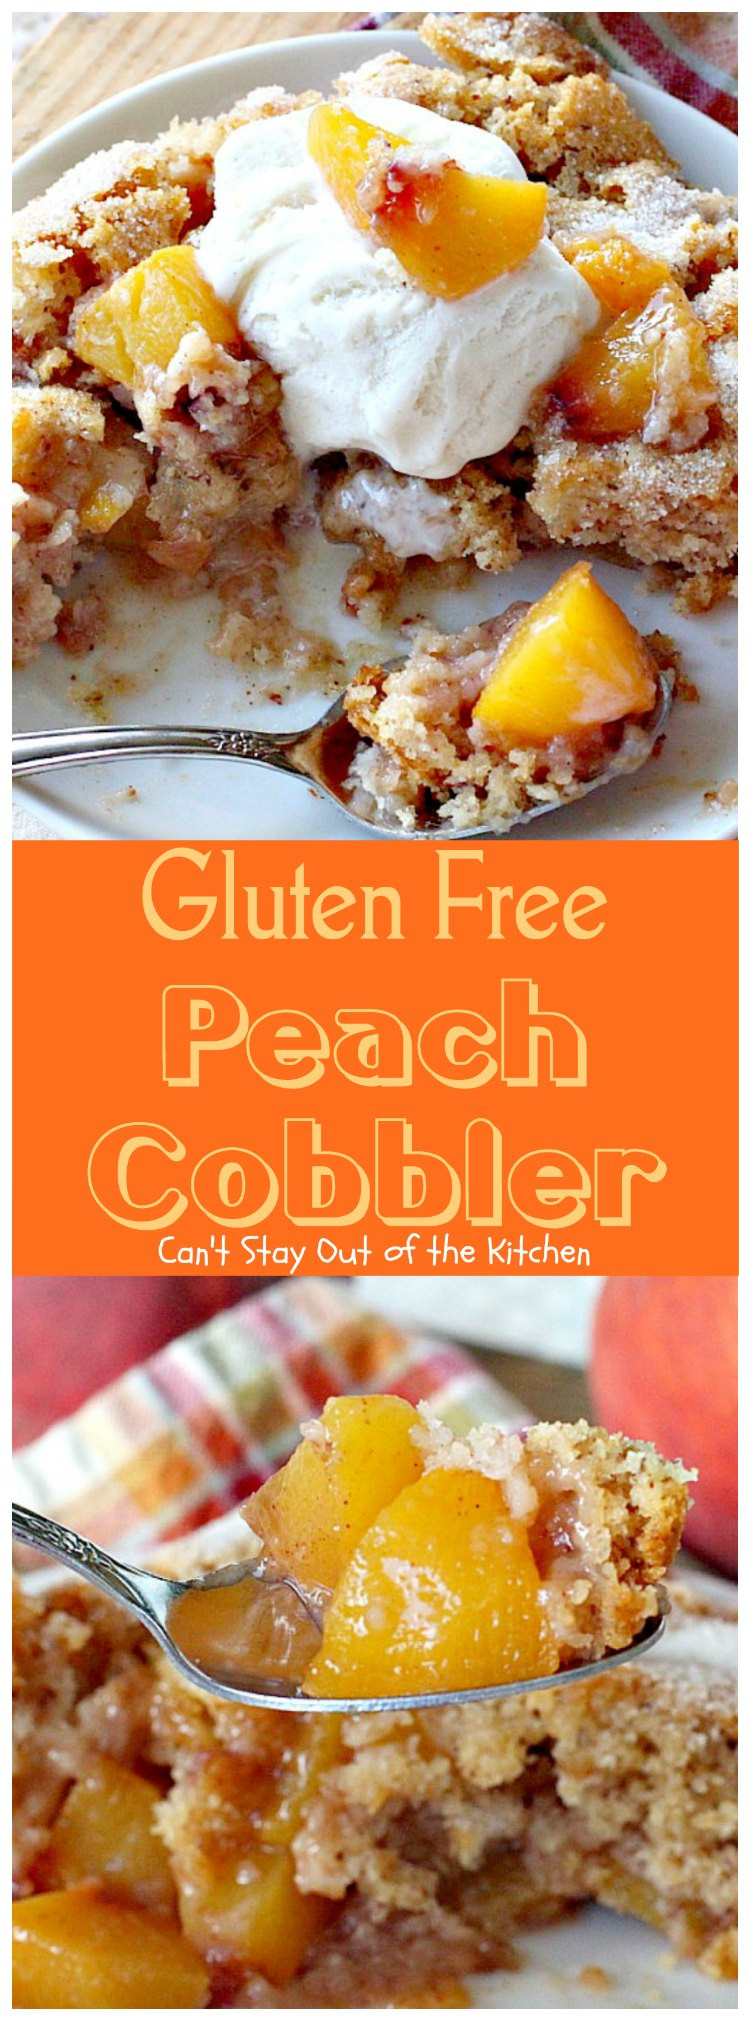 Gluten Free Peach Dessert
 Gluten Free Peach Cobbler Can t Stay Out of the Kitchen